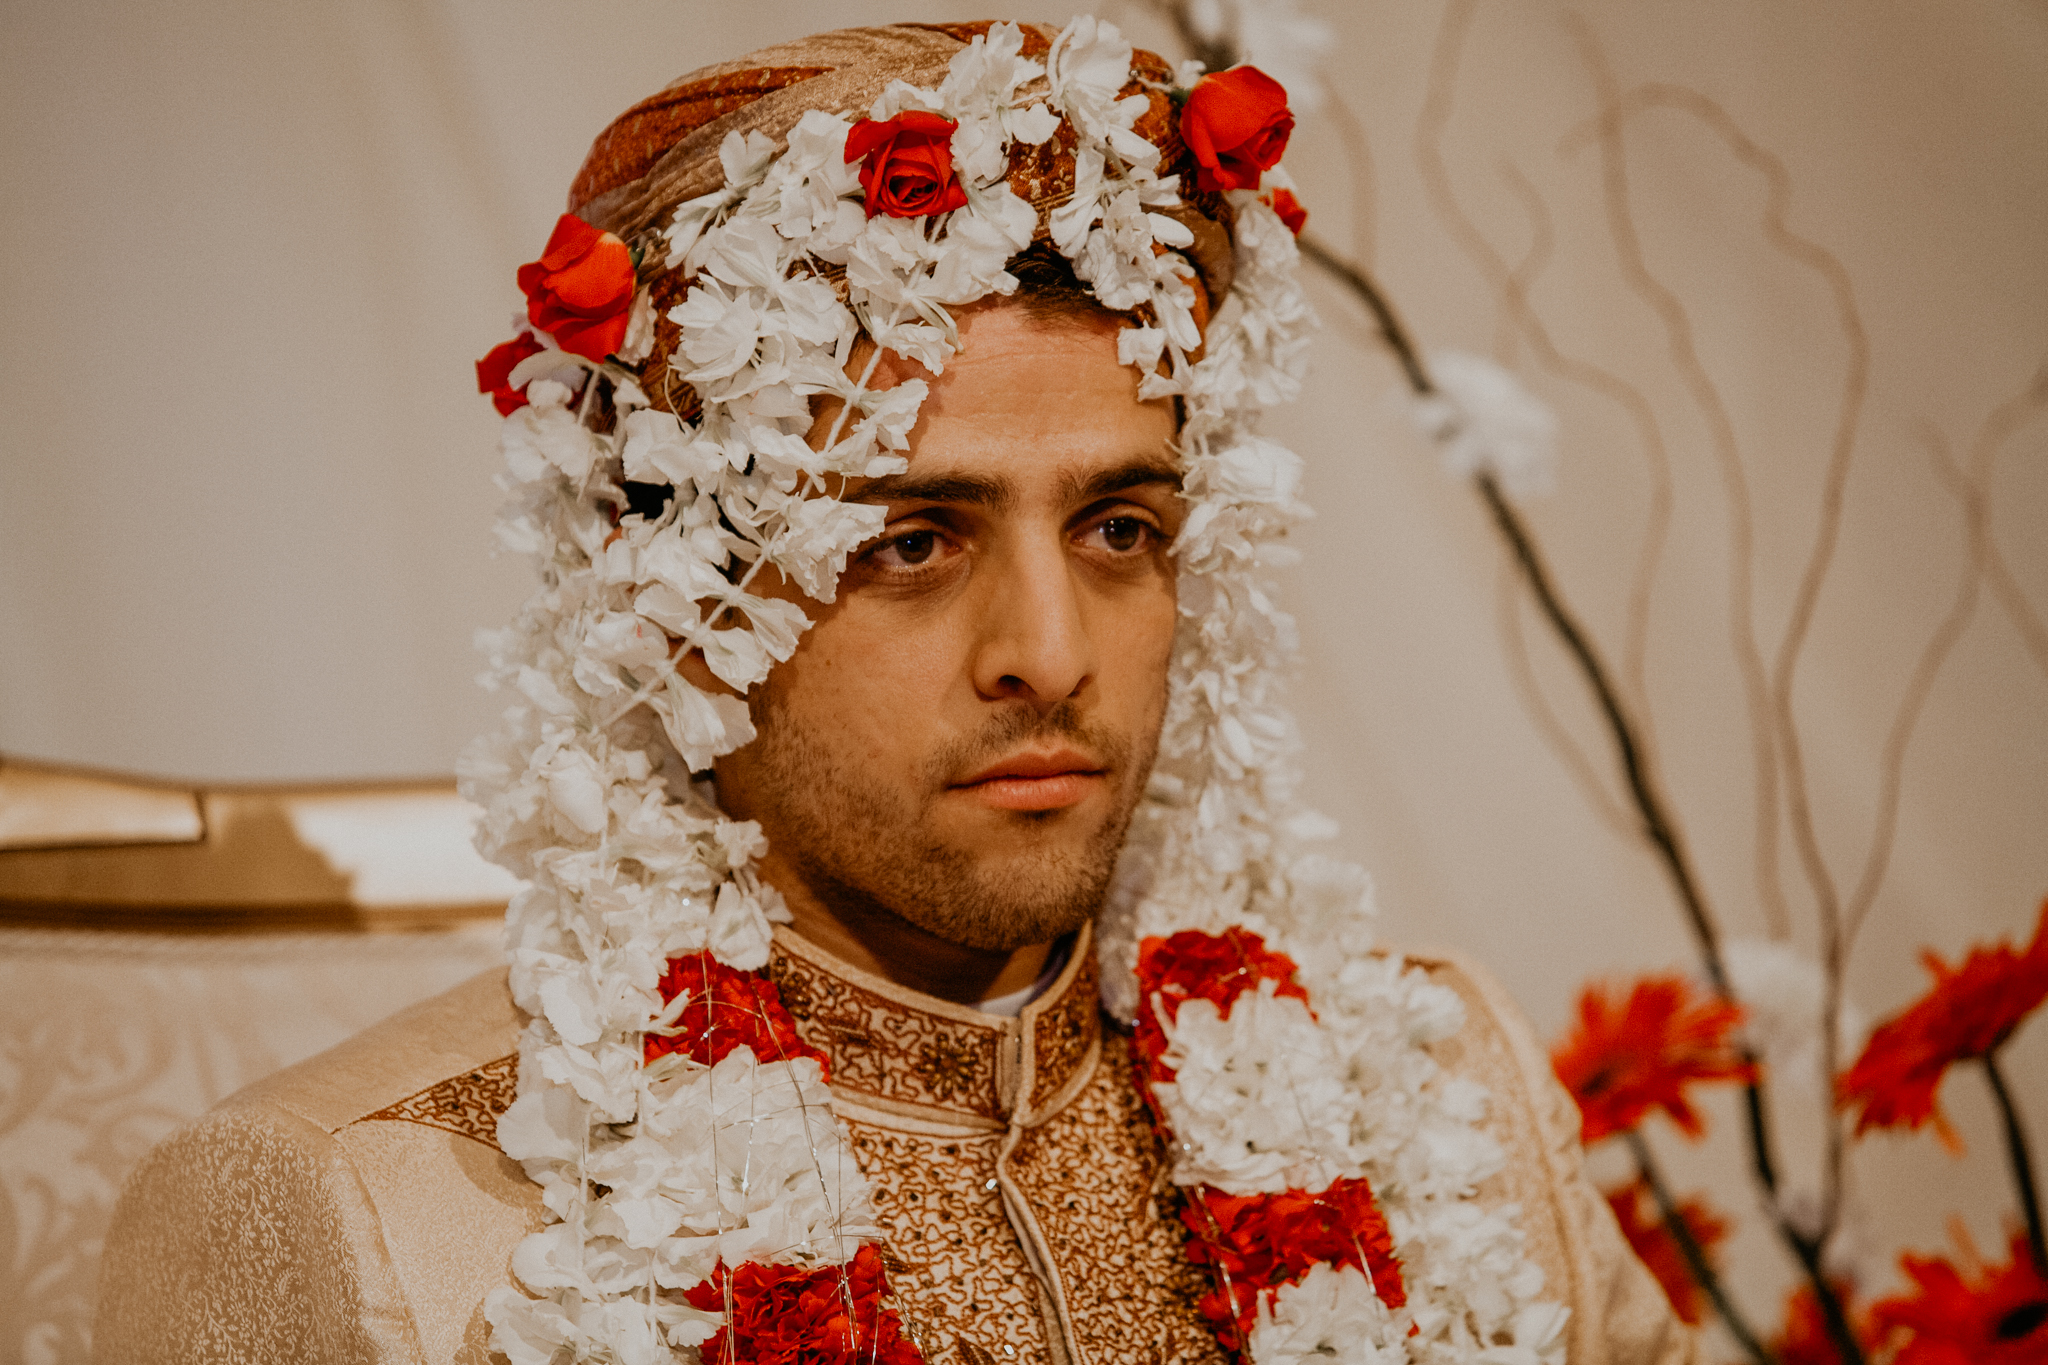 Indian groom with flower veil at Mehndi wedding